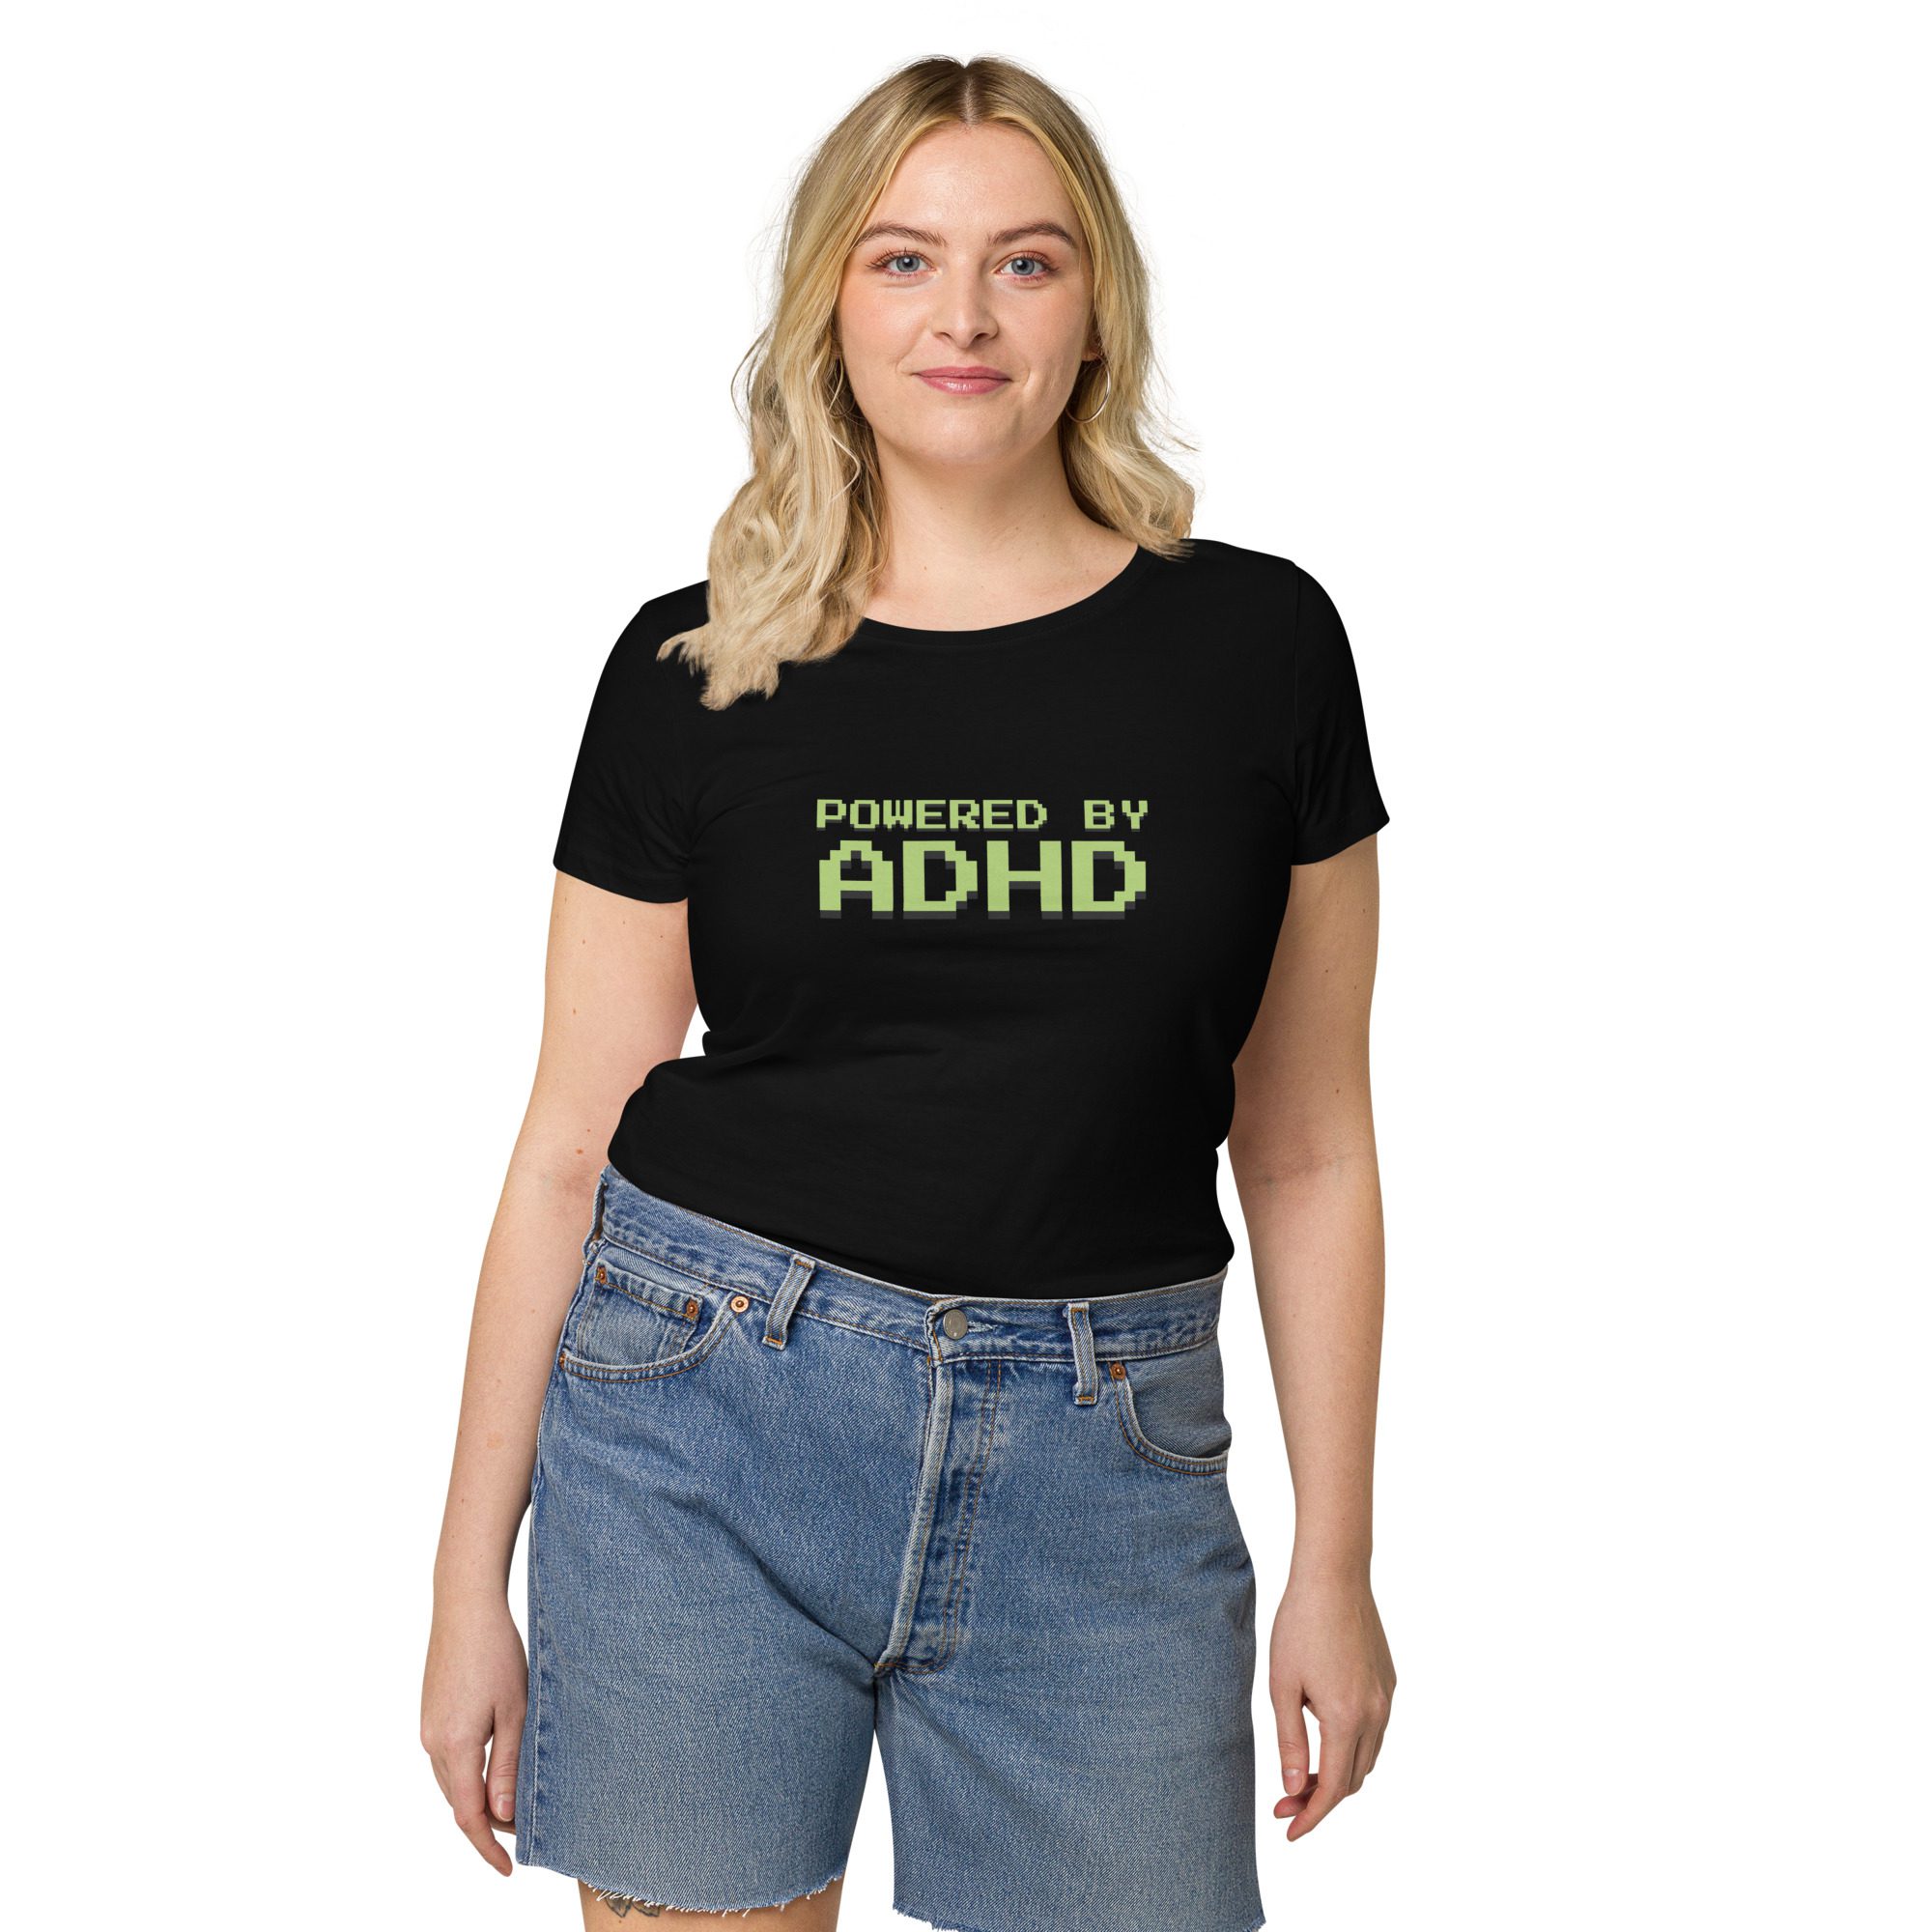 Powered By ADHD Women’s Organic T-shirt